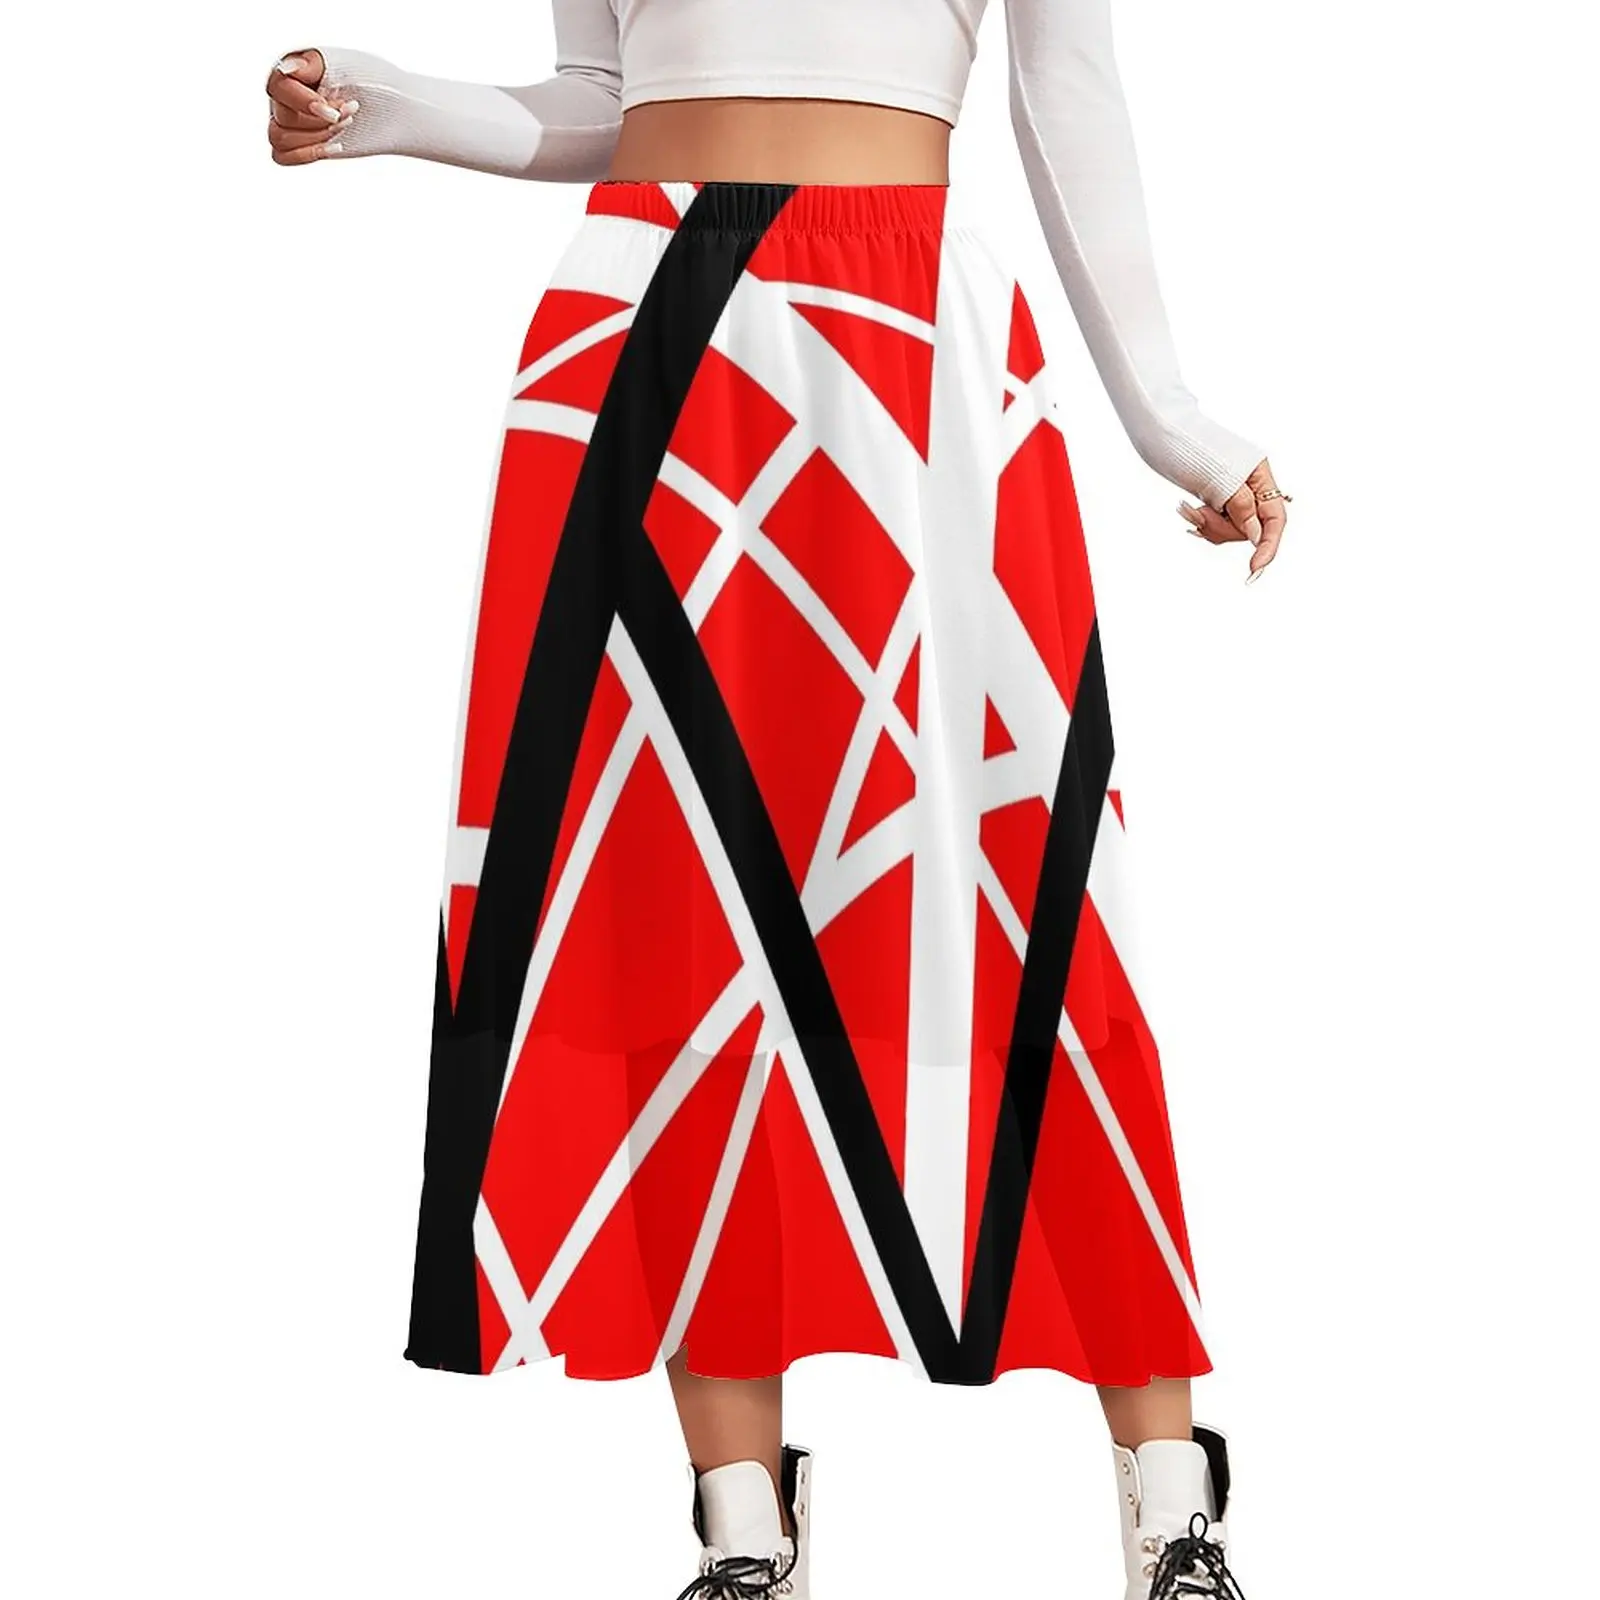 

Van Halen Chiffon Skirt Red Black and White Line Art Harajuku Casual Skirts Women Cute Boho Skirt Custom Bottoms Gift Idea